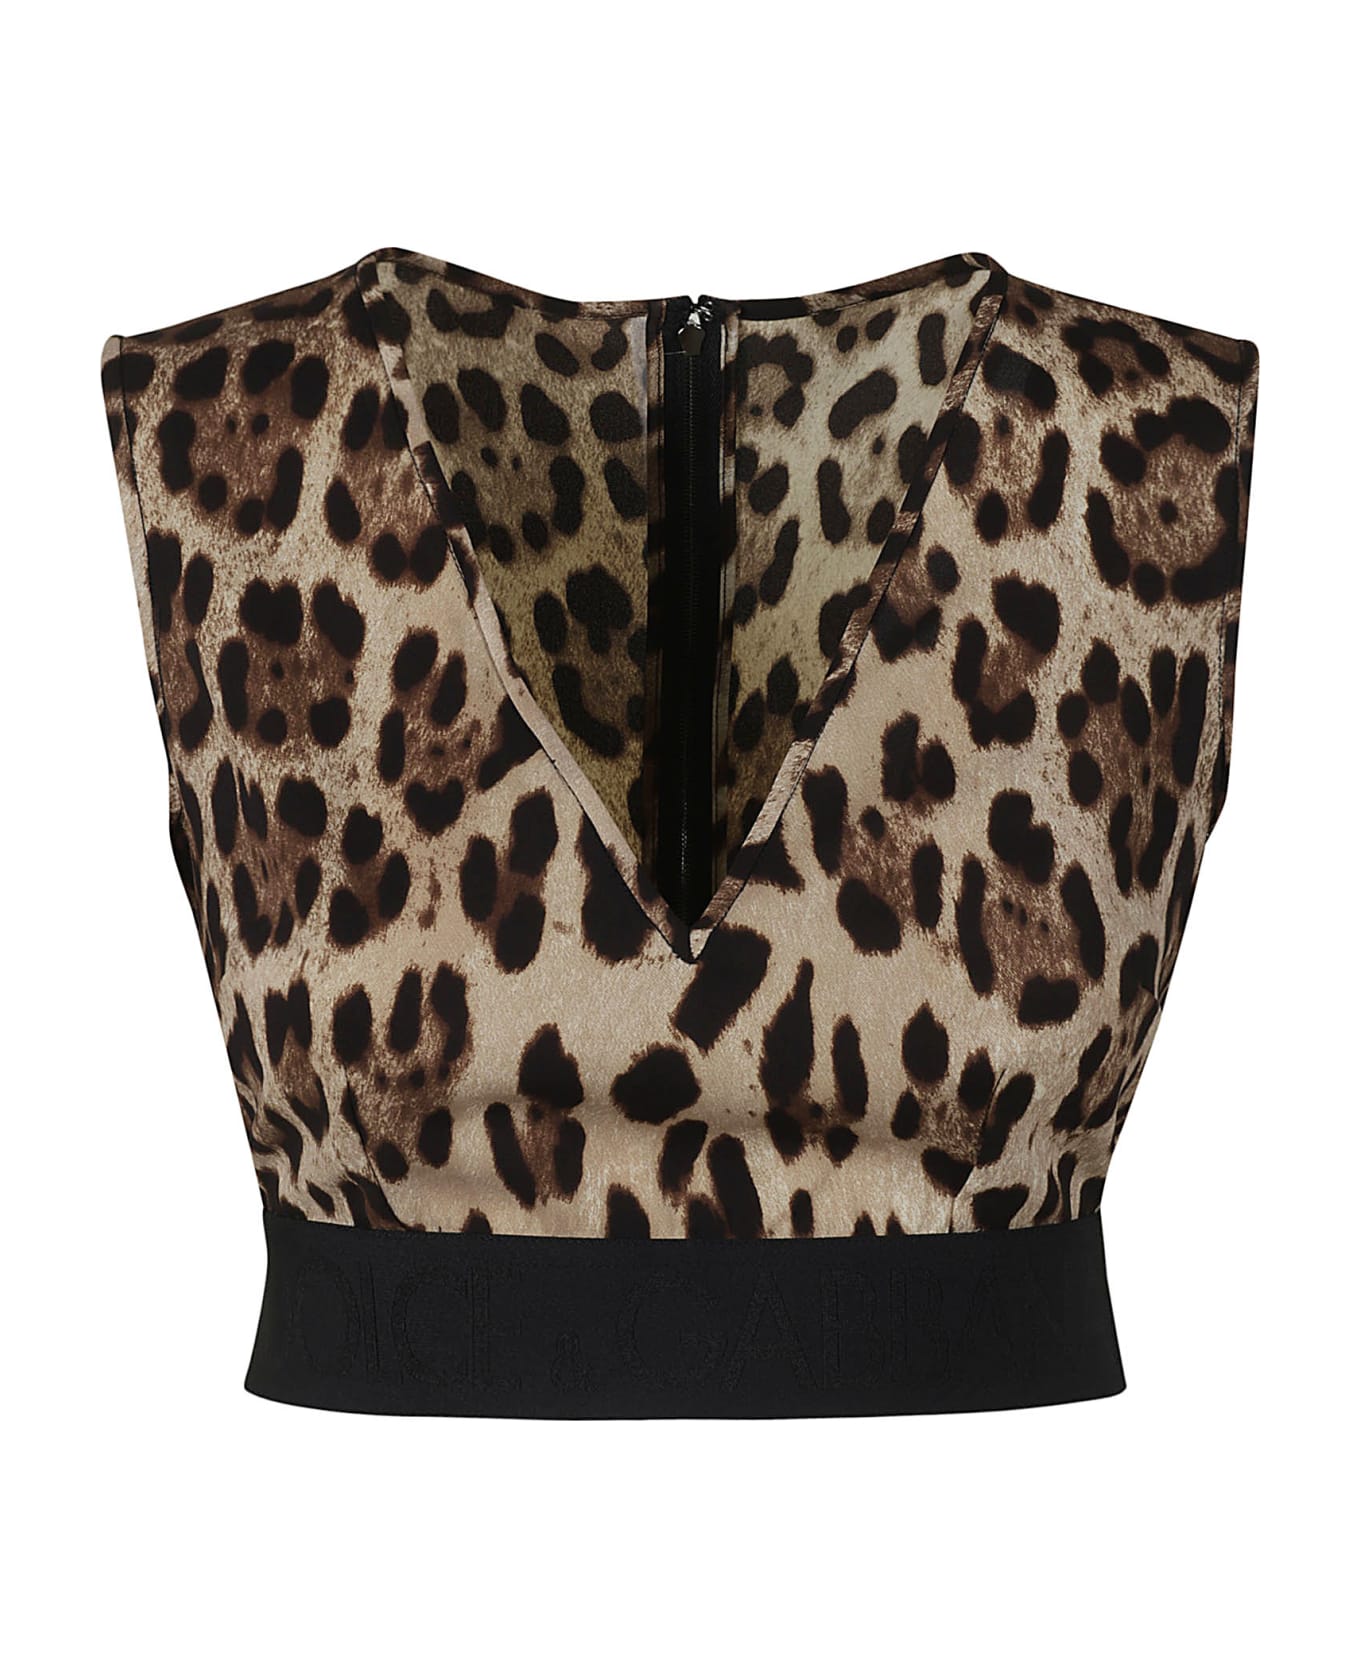 Dolce & Gabbana Animal Print Cropped Top - leopard print